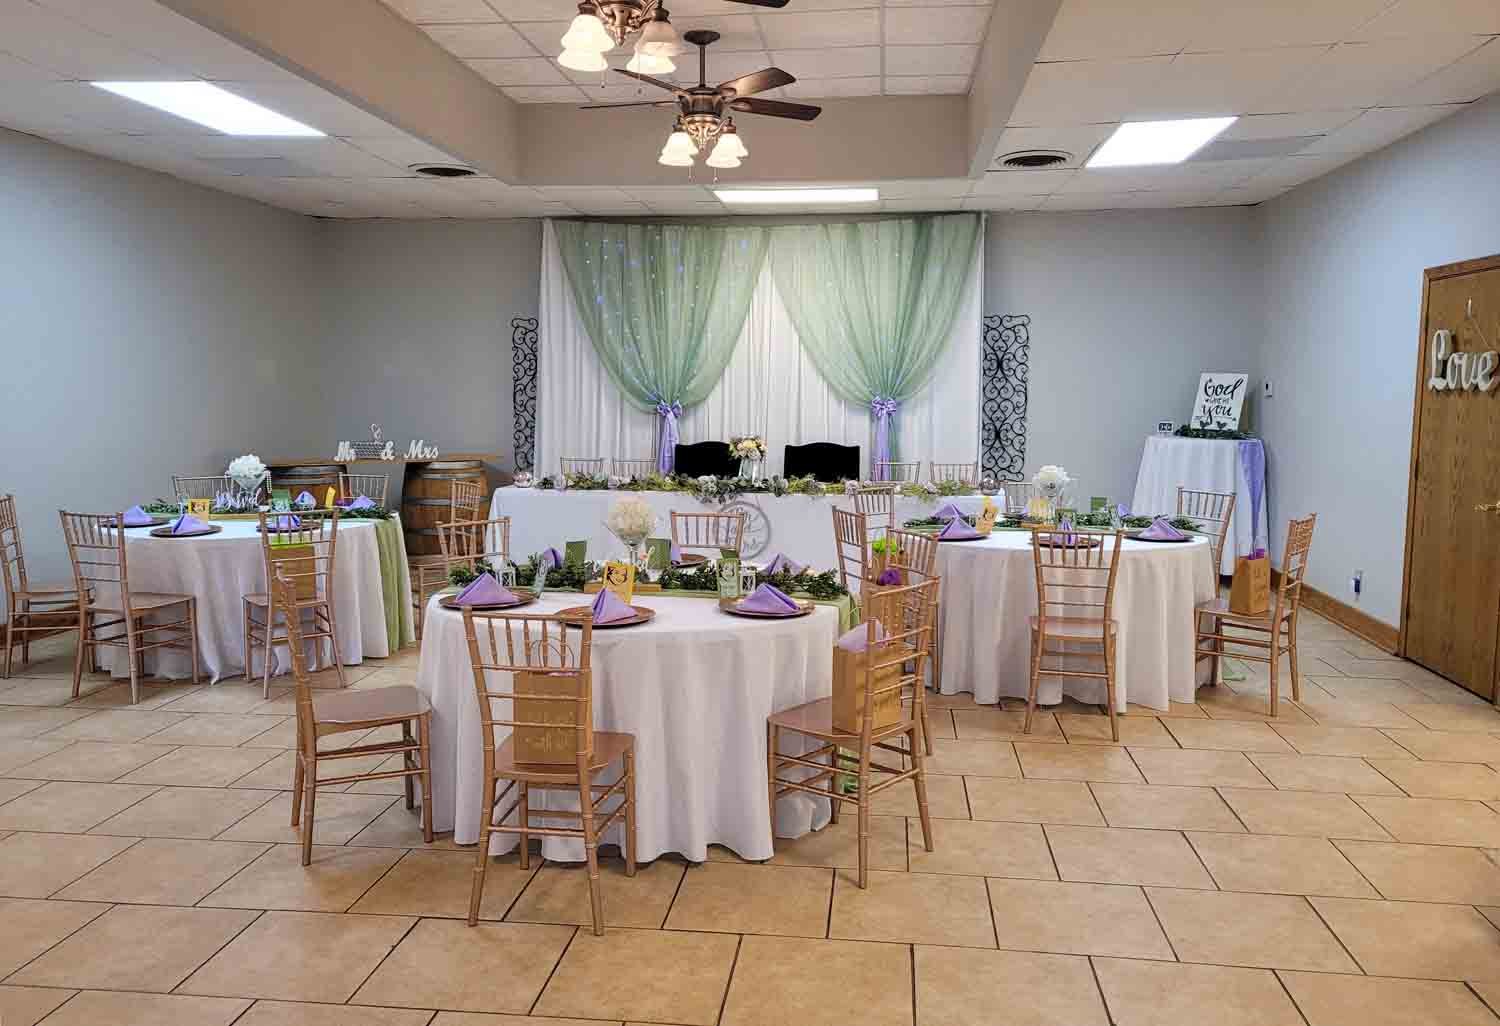 Mallinson Vineyard and Hall Wedding Venue - Independence Missouri.jpg